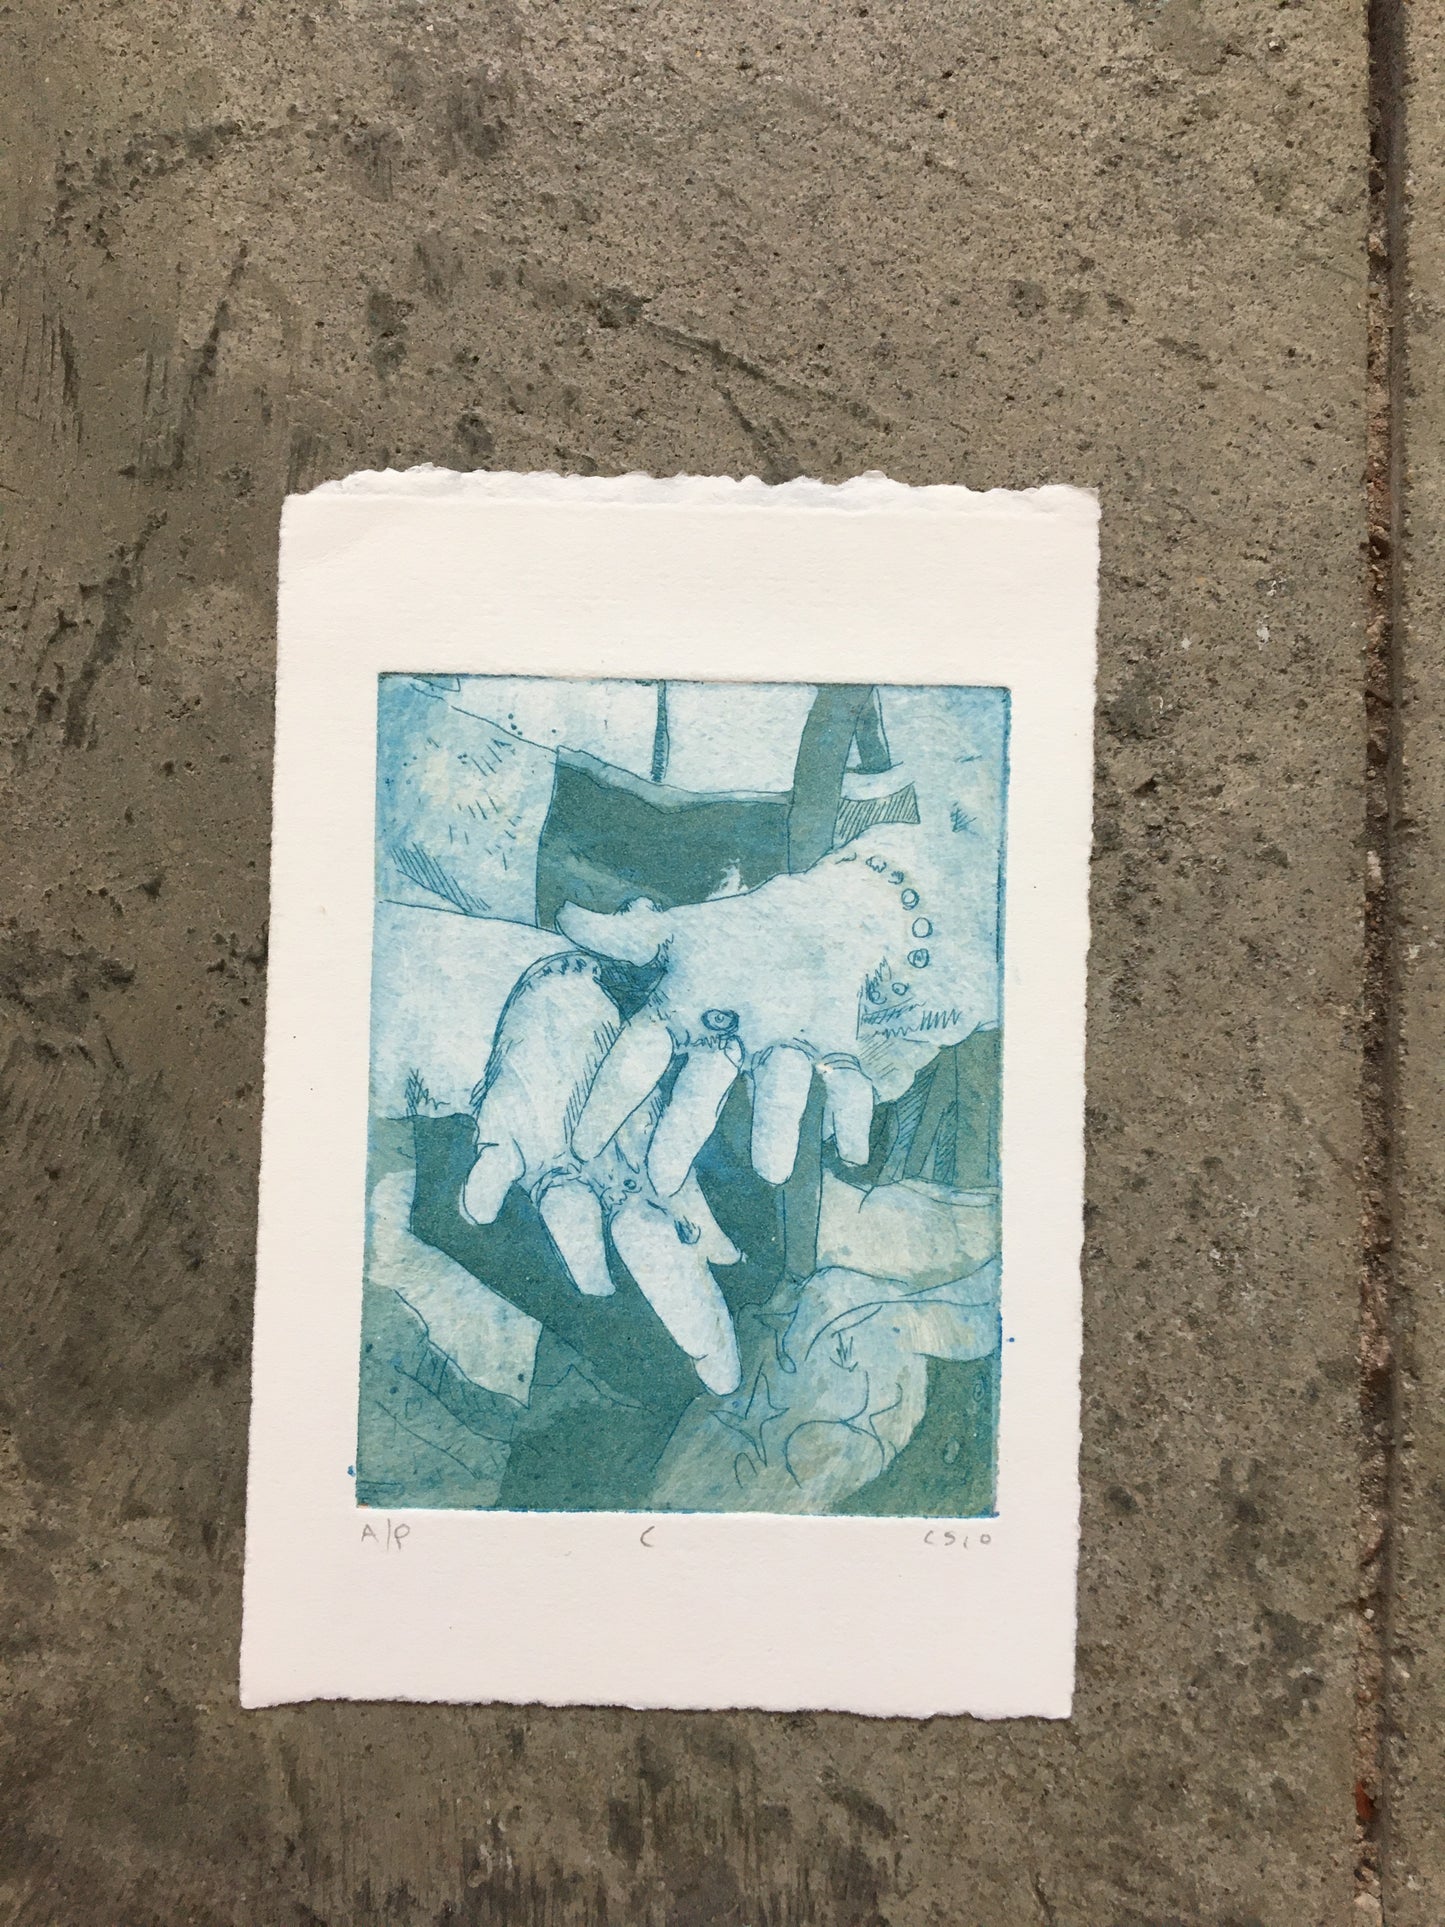 Yasmin's Hands - Tiny prints series